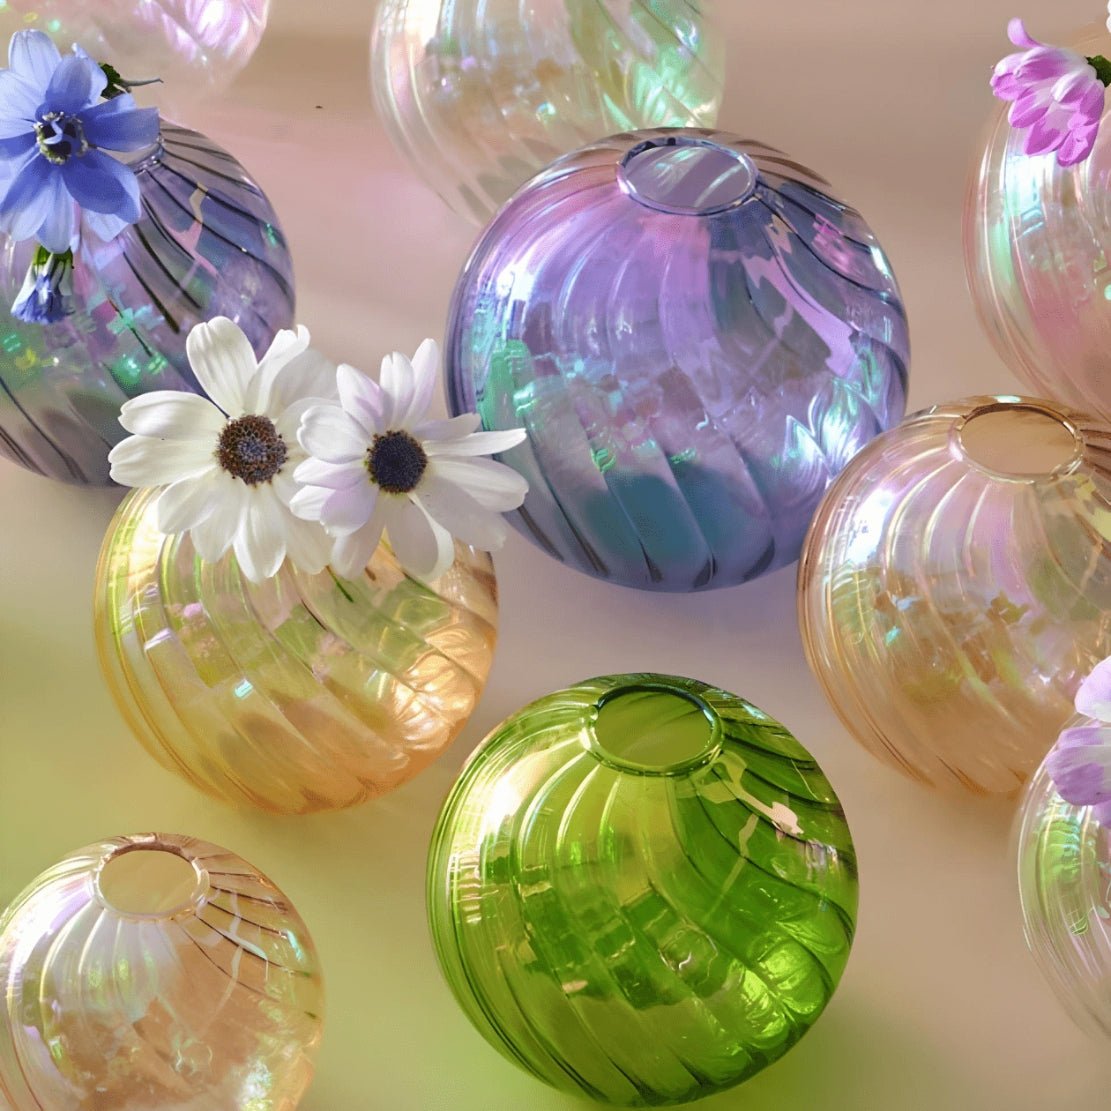 Colourful, shiny ball glass flower decorative vases